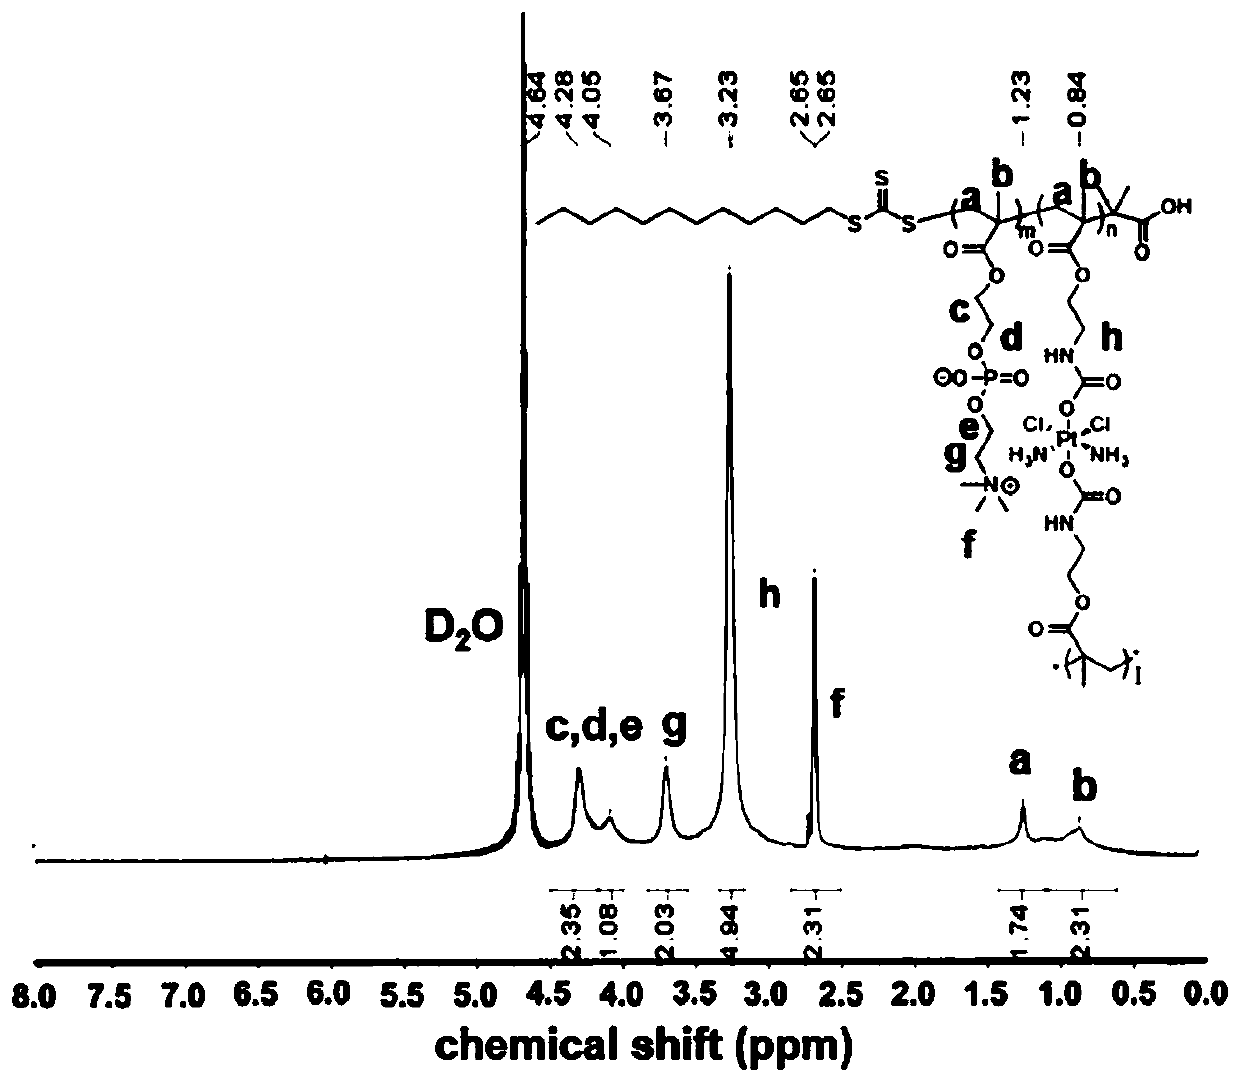 Use of tetravalent cisplatin prodrugs in combination with bioreductive drugs